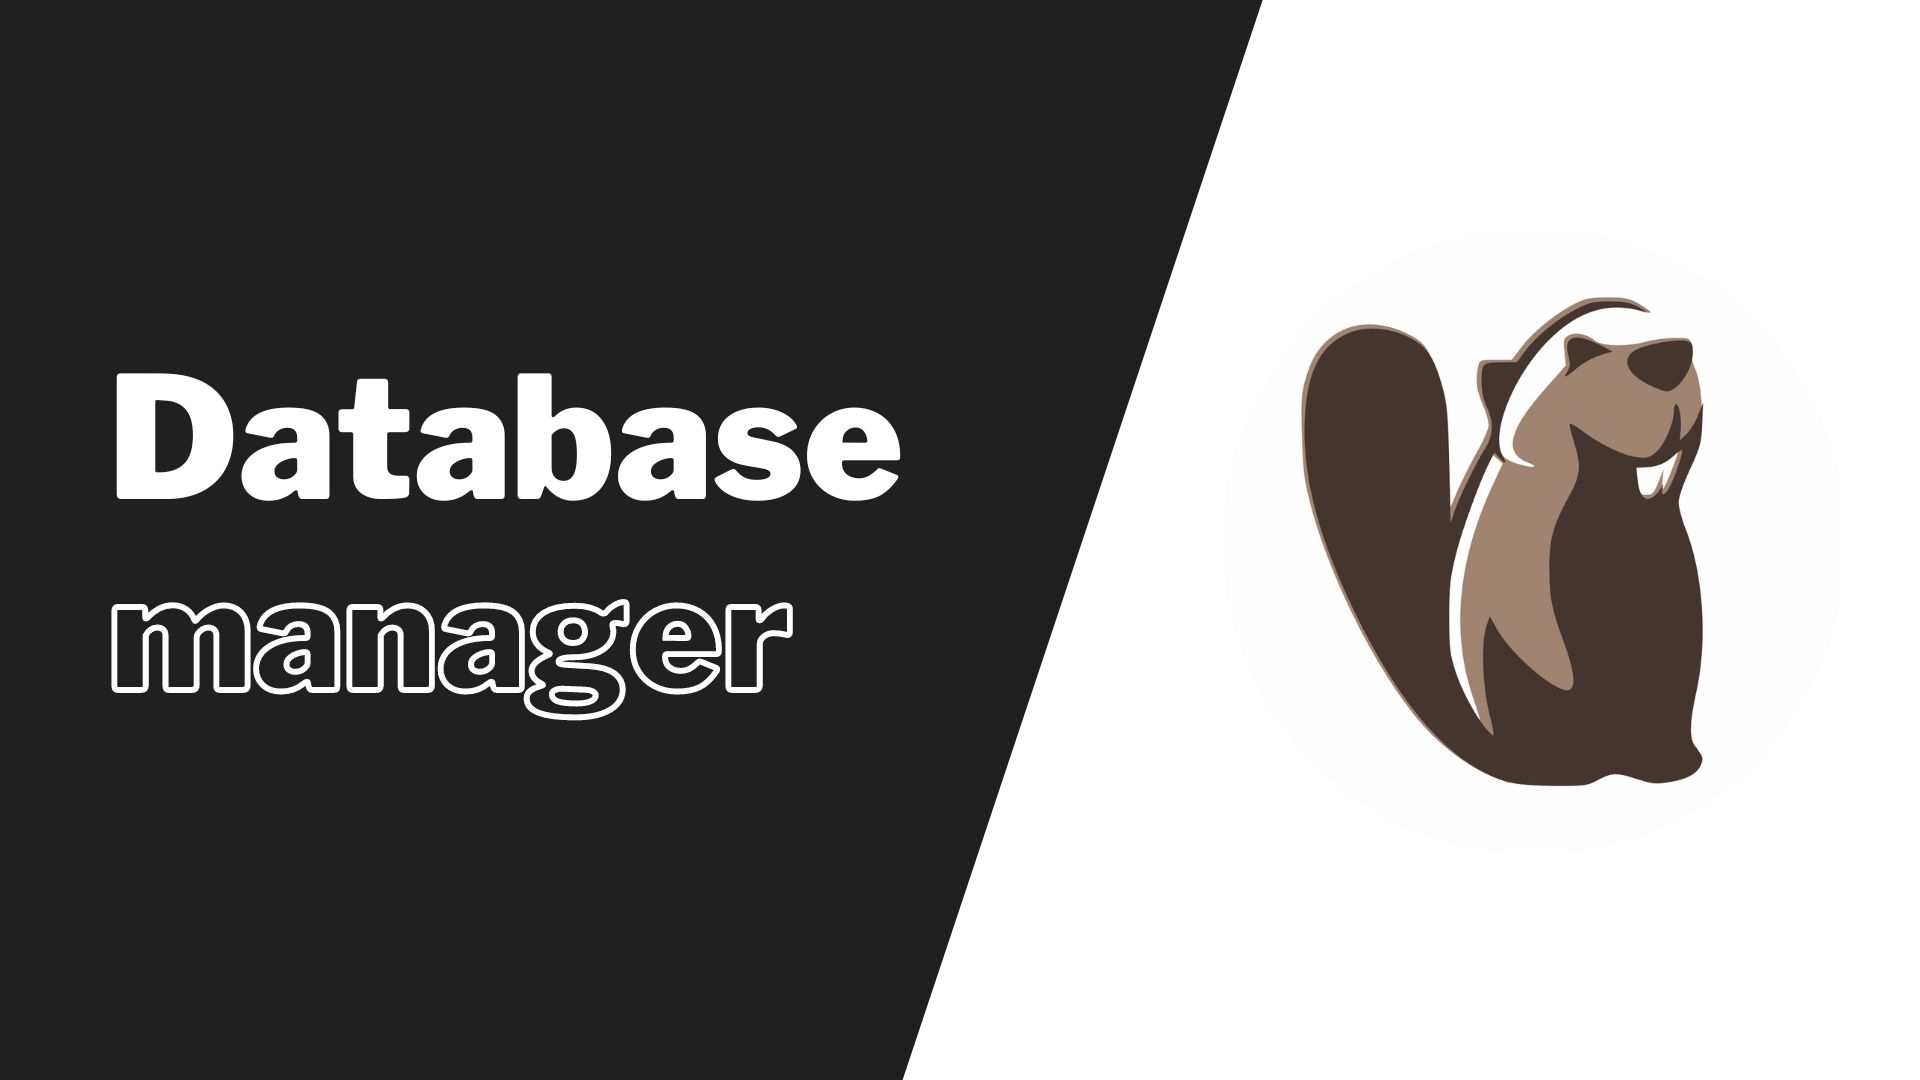 DBeaver - Universal Database Manager